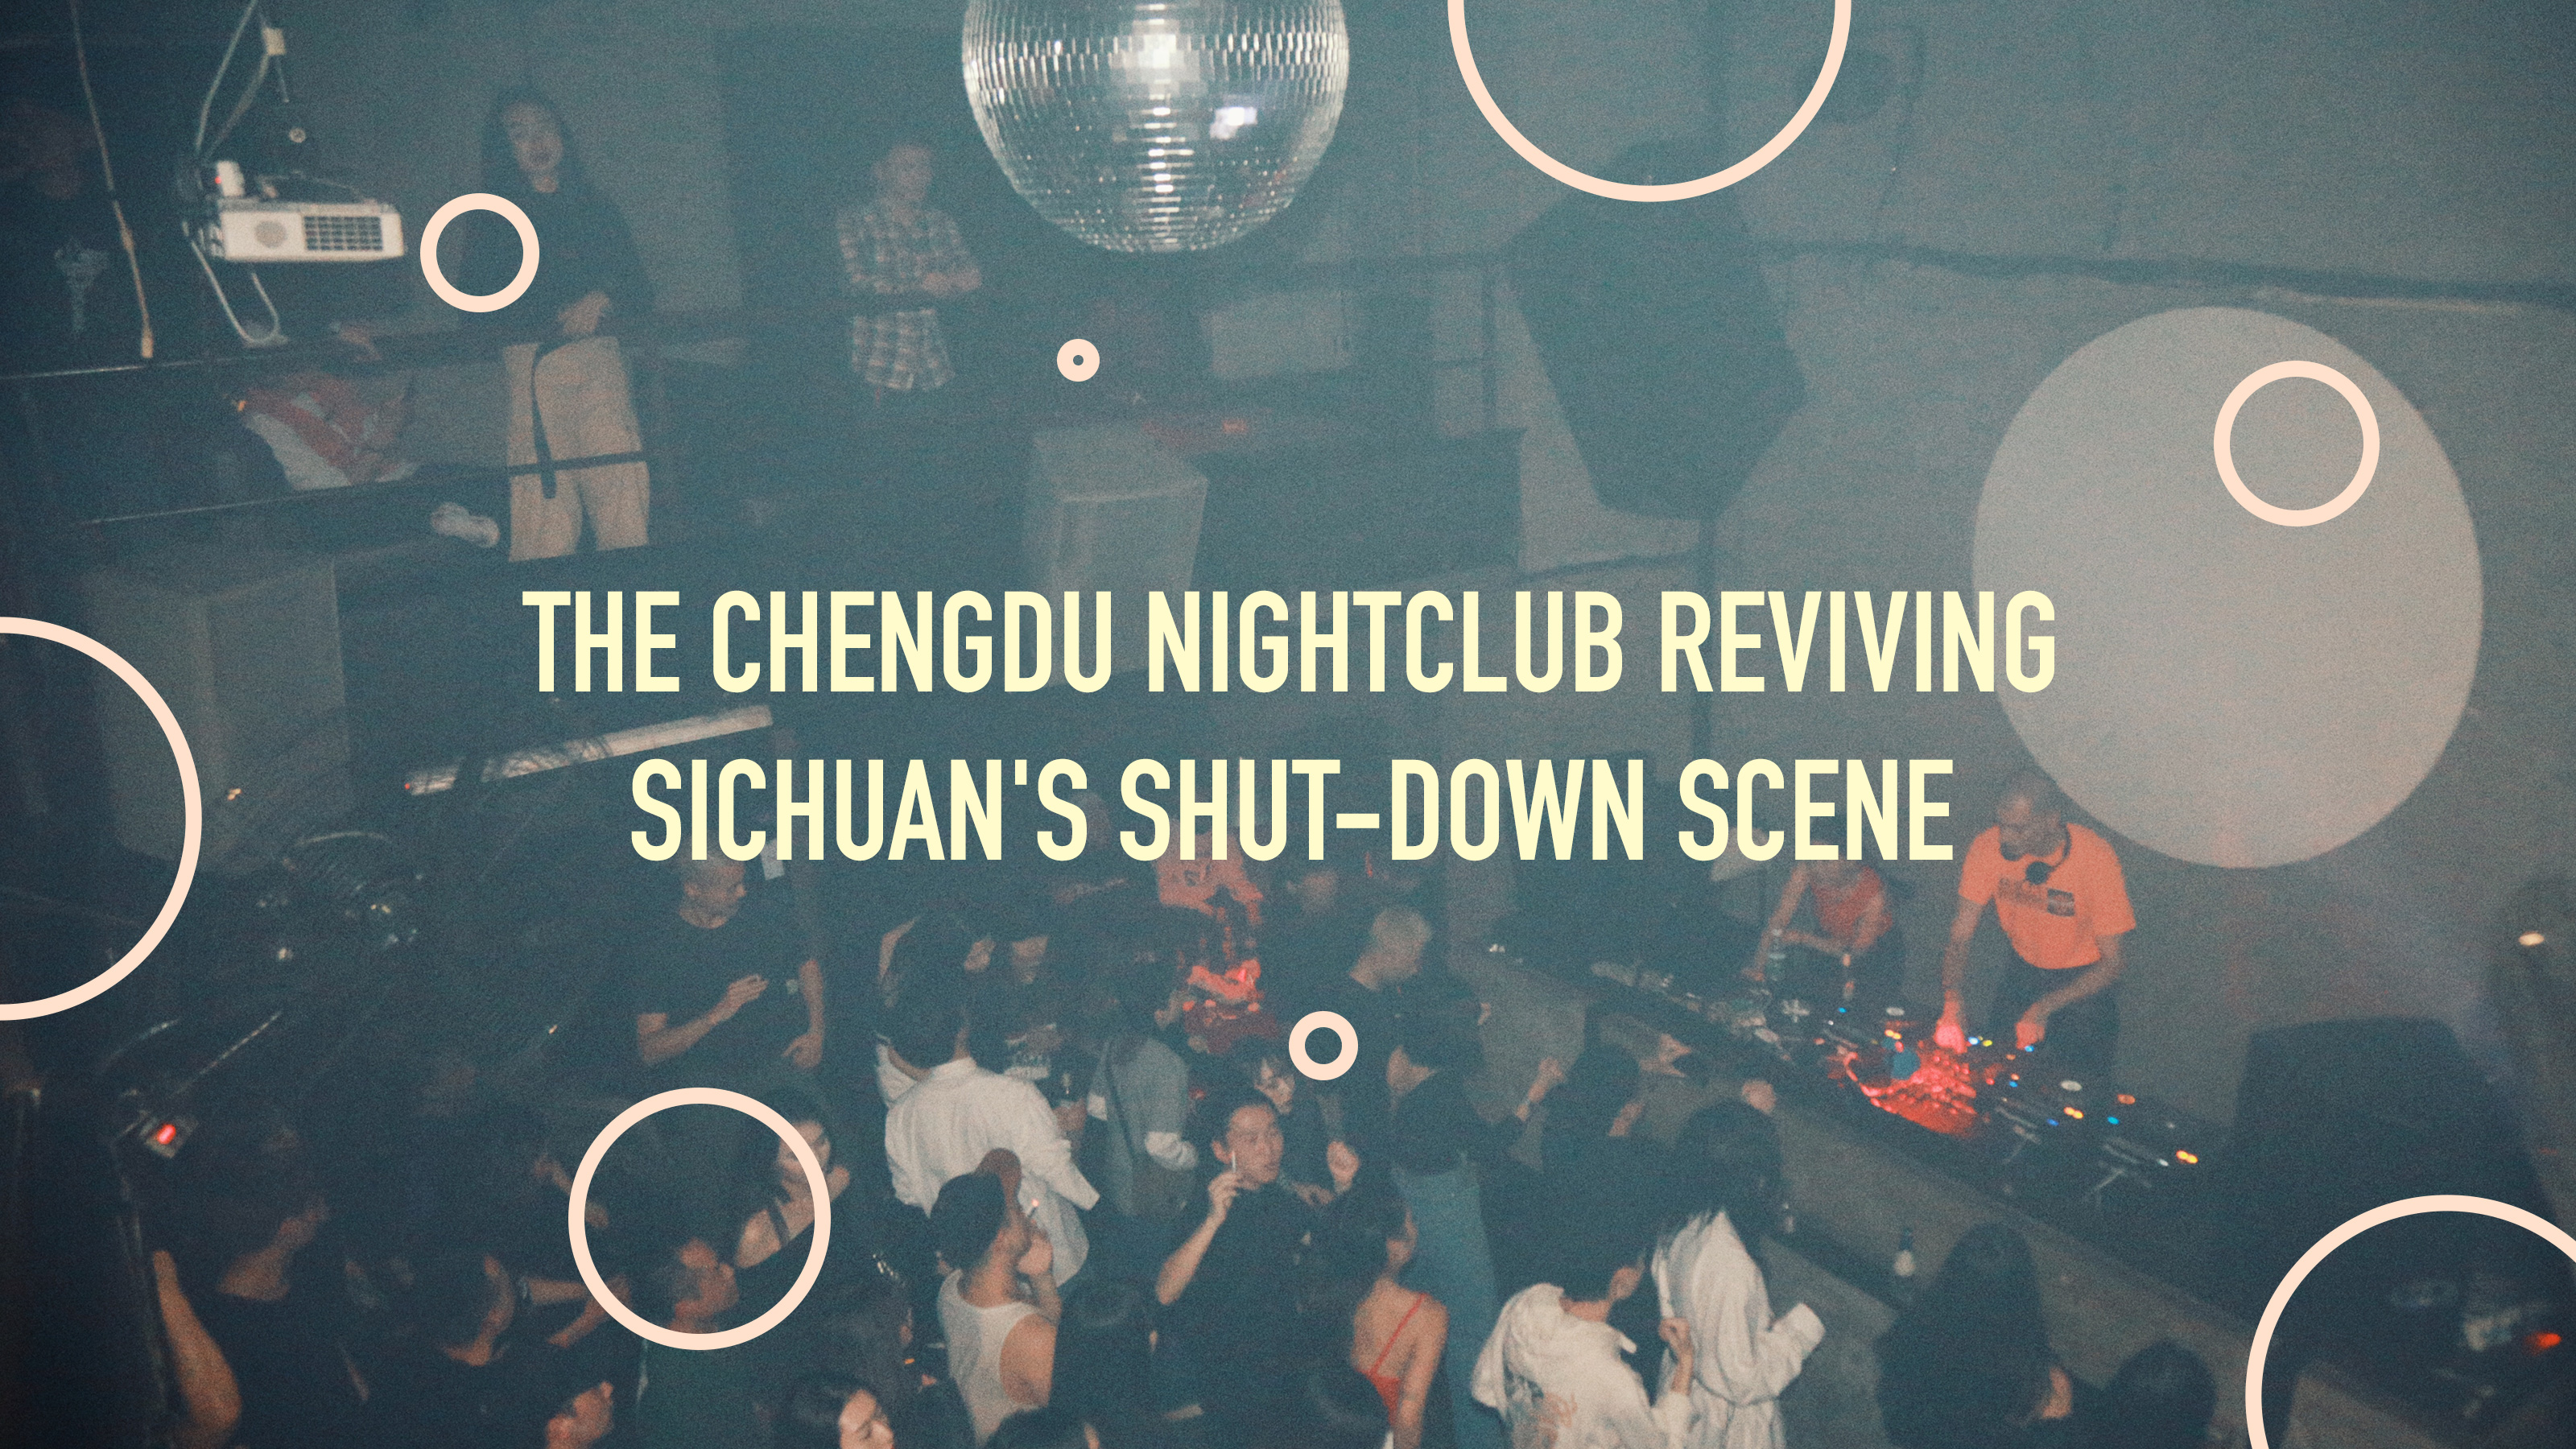 The Chengdu Nightclub Reviving Sichuan's Shut-Down Scene